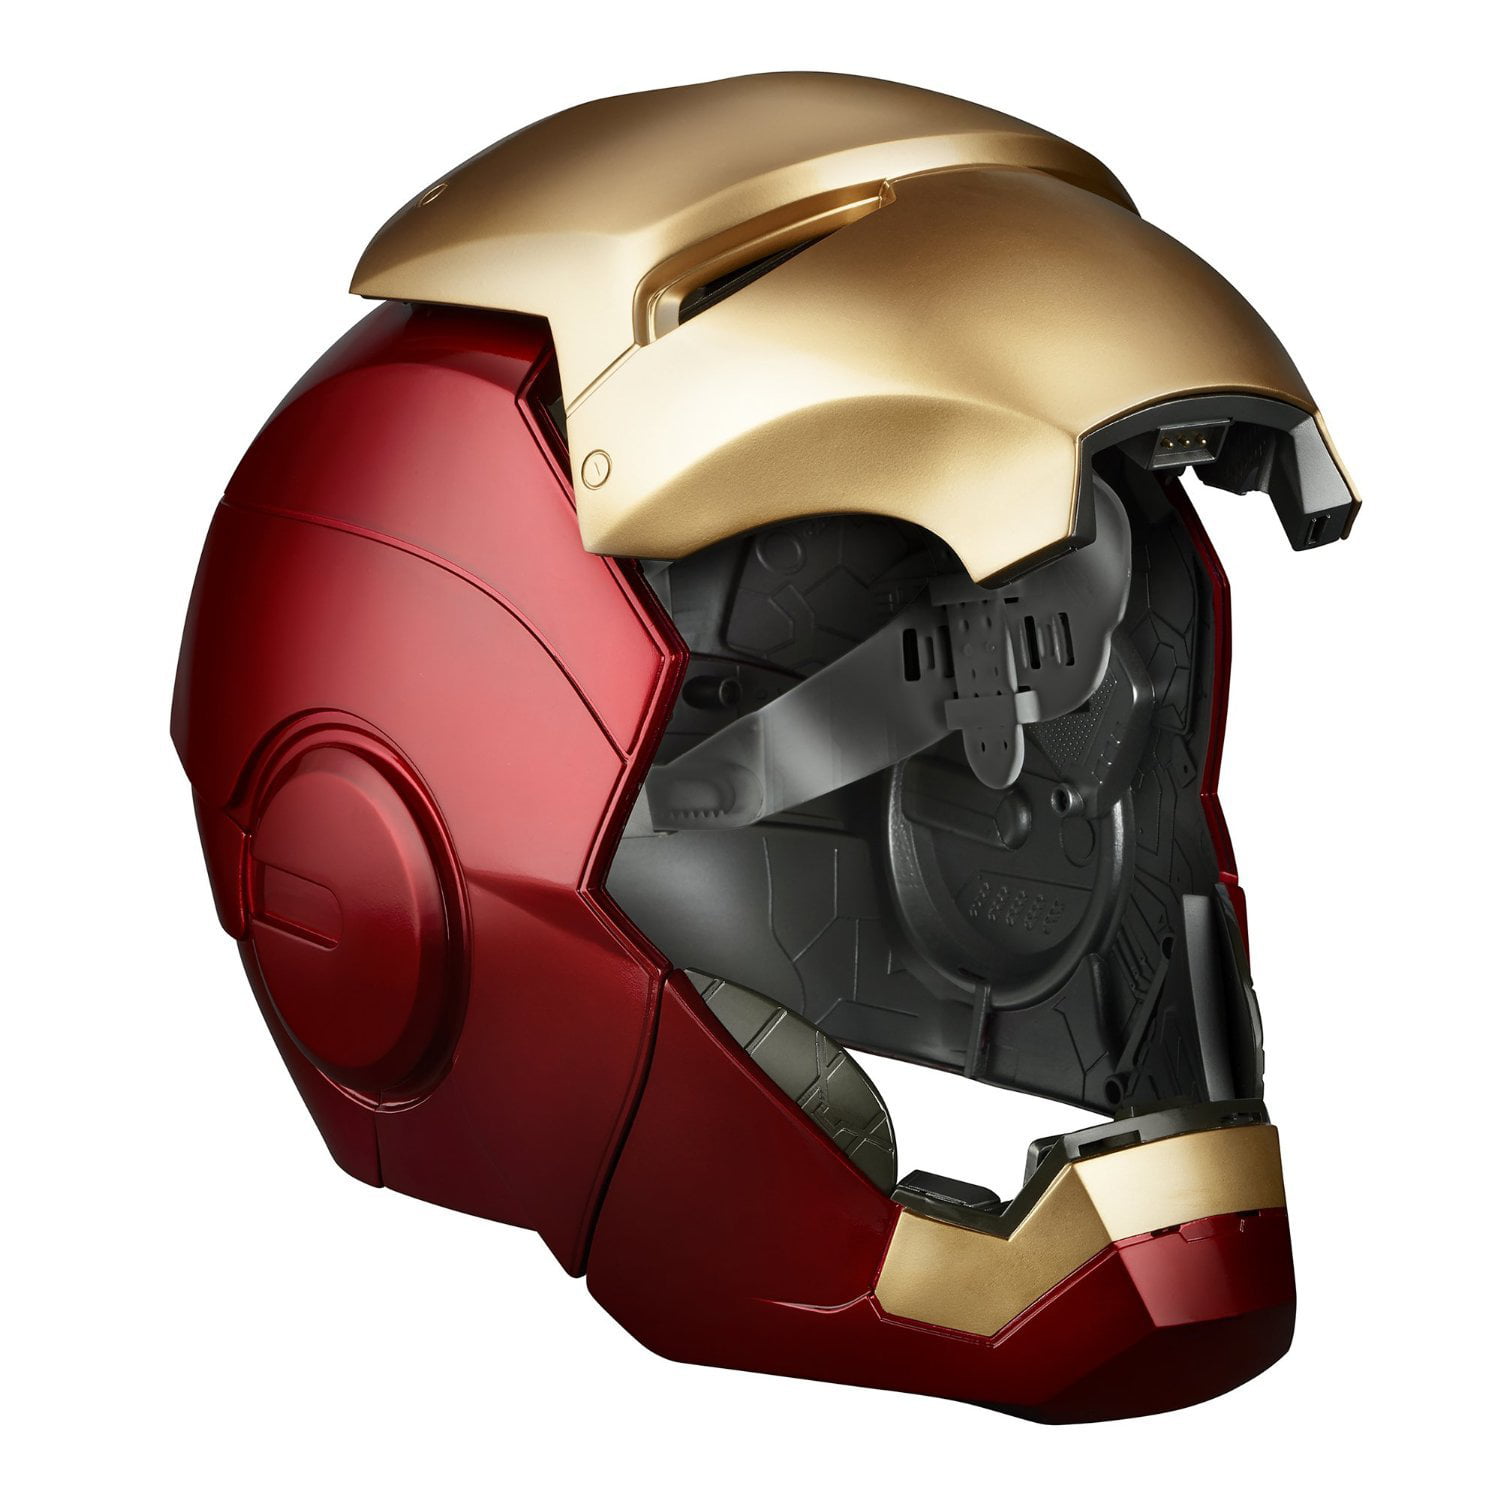 Hasbro HSBB7435 Avenger Legends Iron Man Electronic Helmet